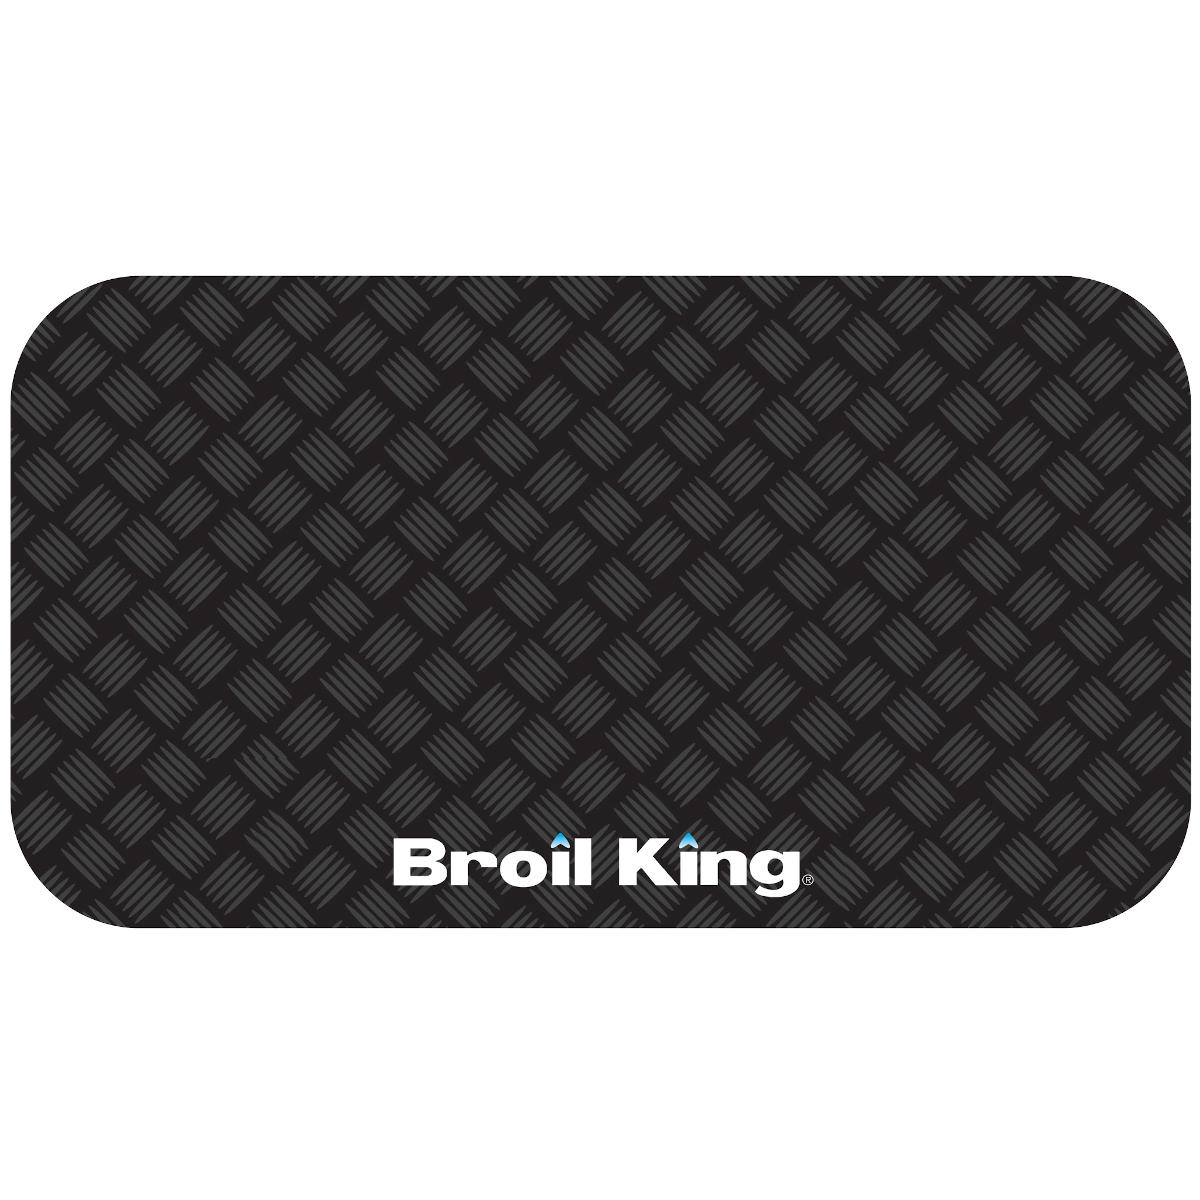 Broil King Grillmatte, schwarz